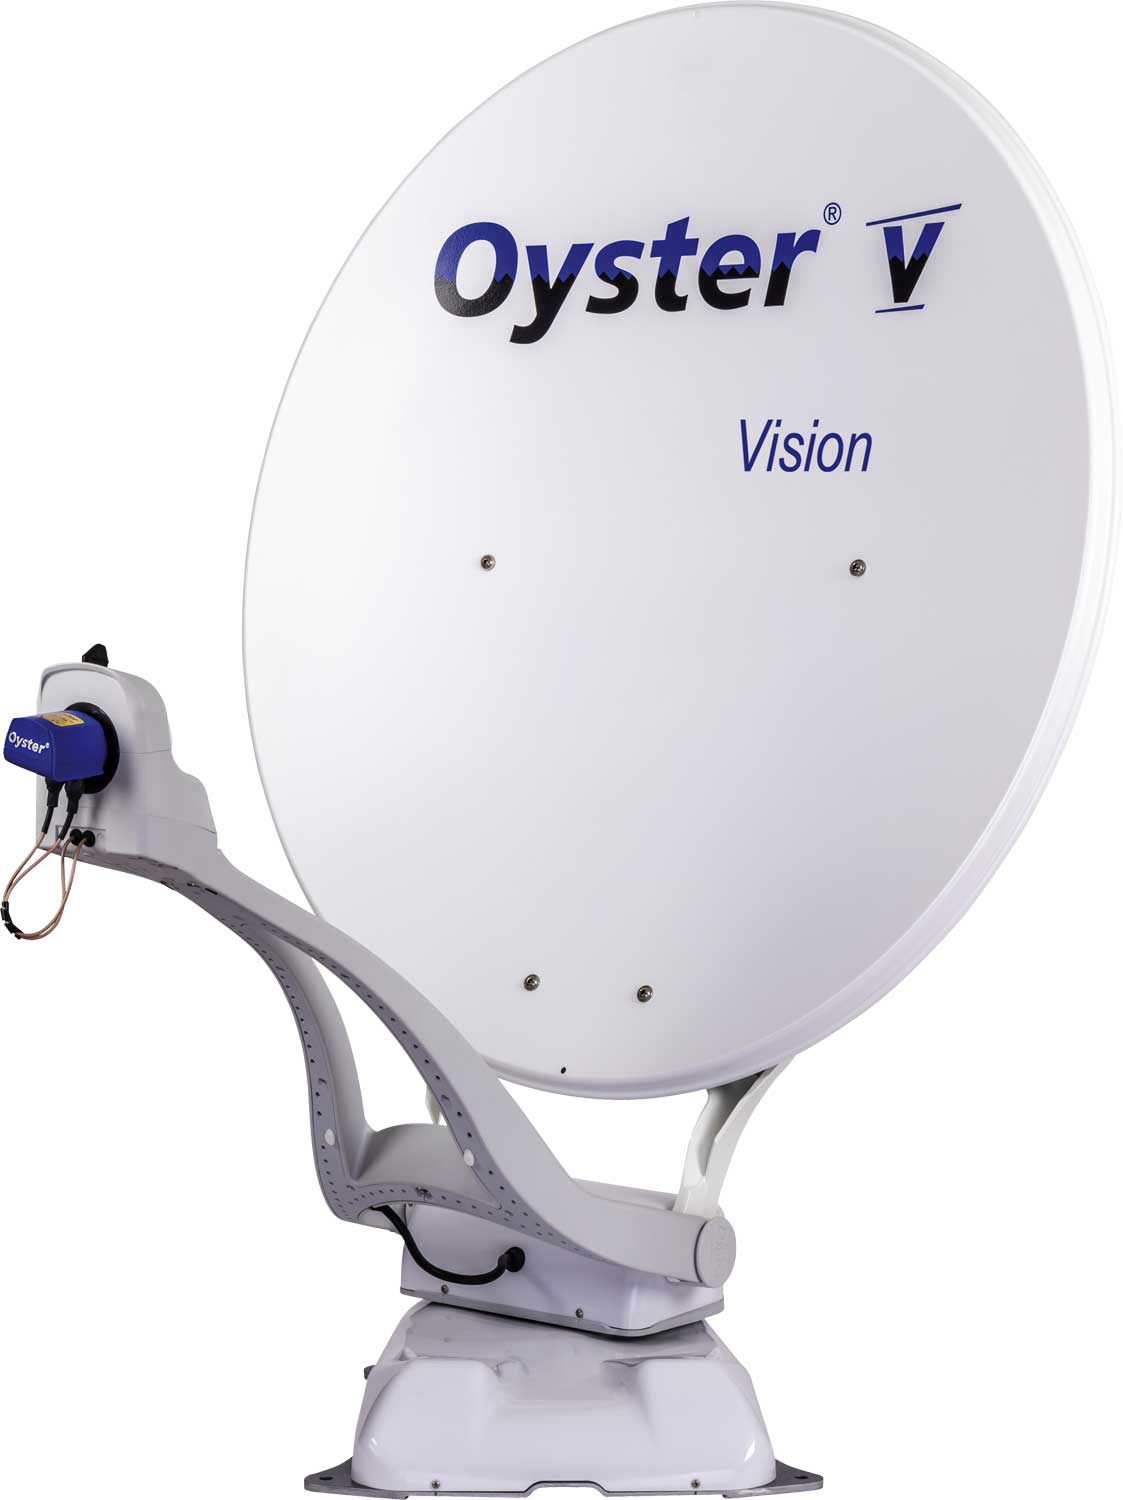 Ten Haaft Oyster Cytrac DX® Vision Twin vollautomatische Sat